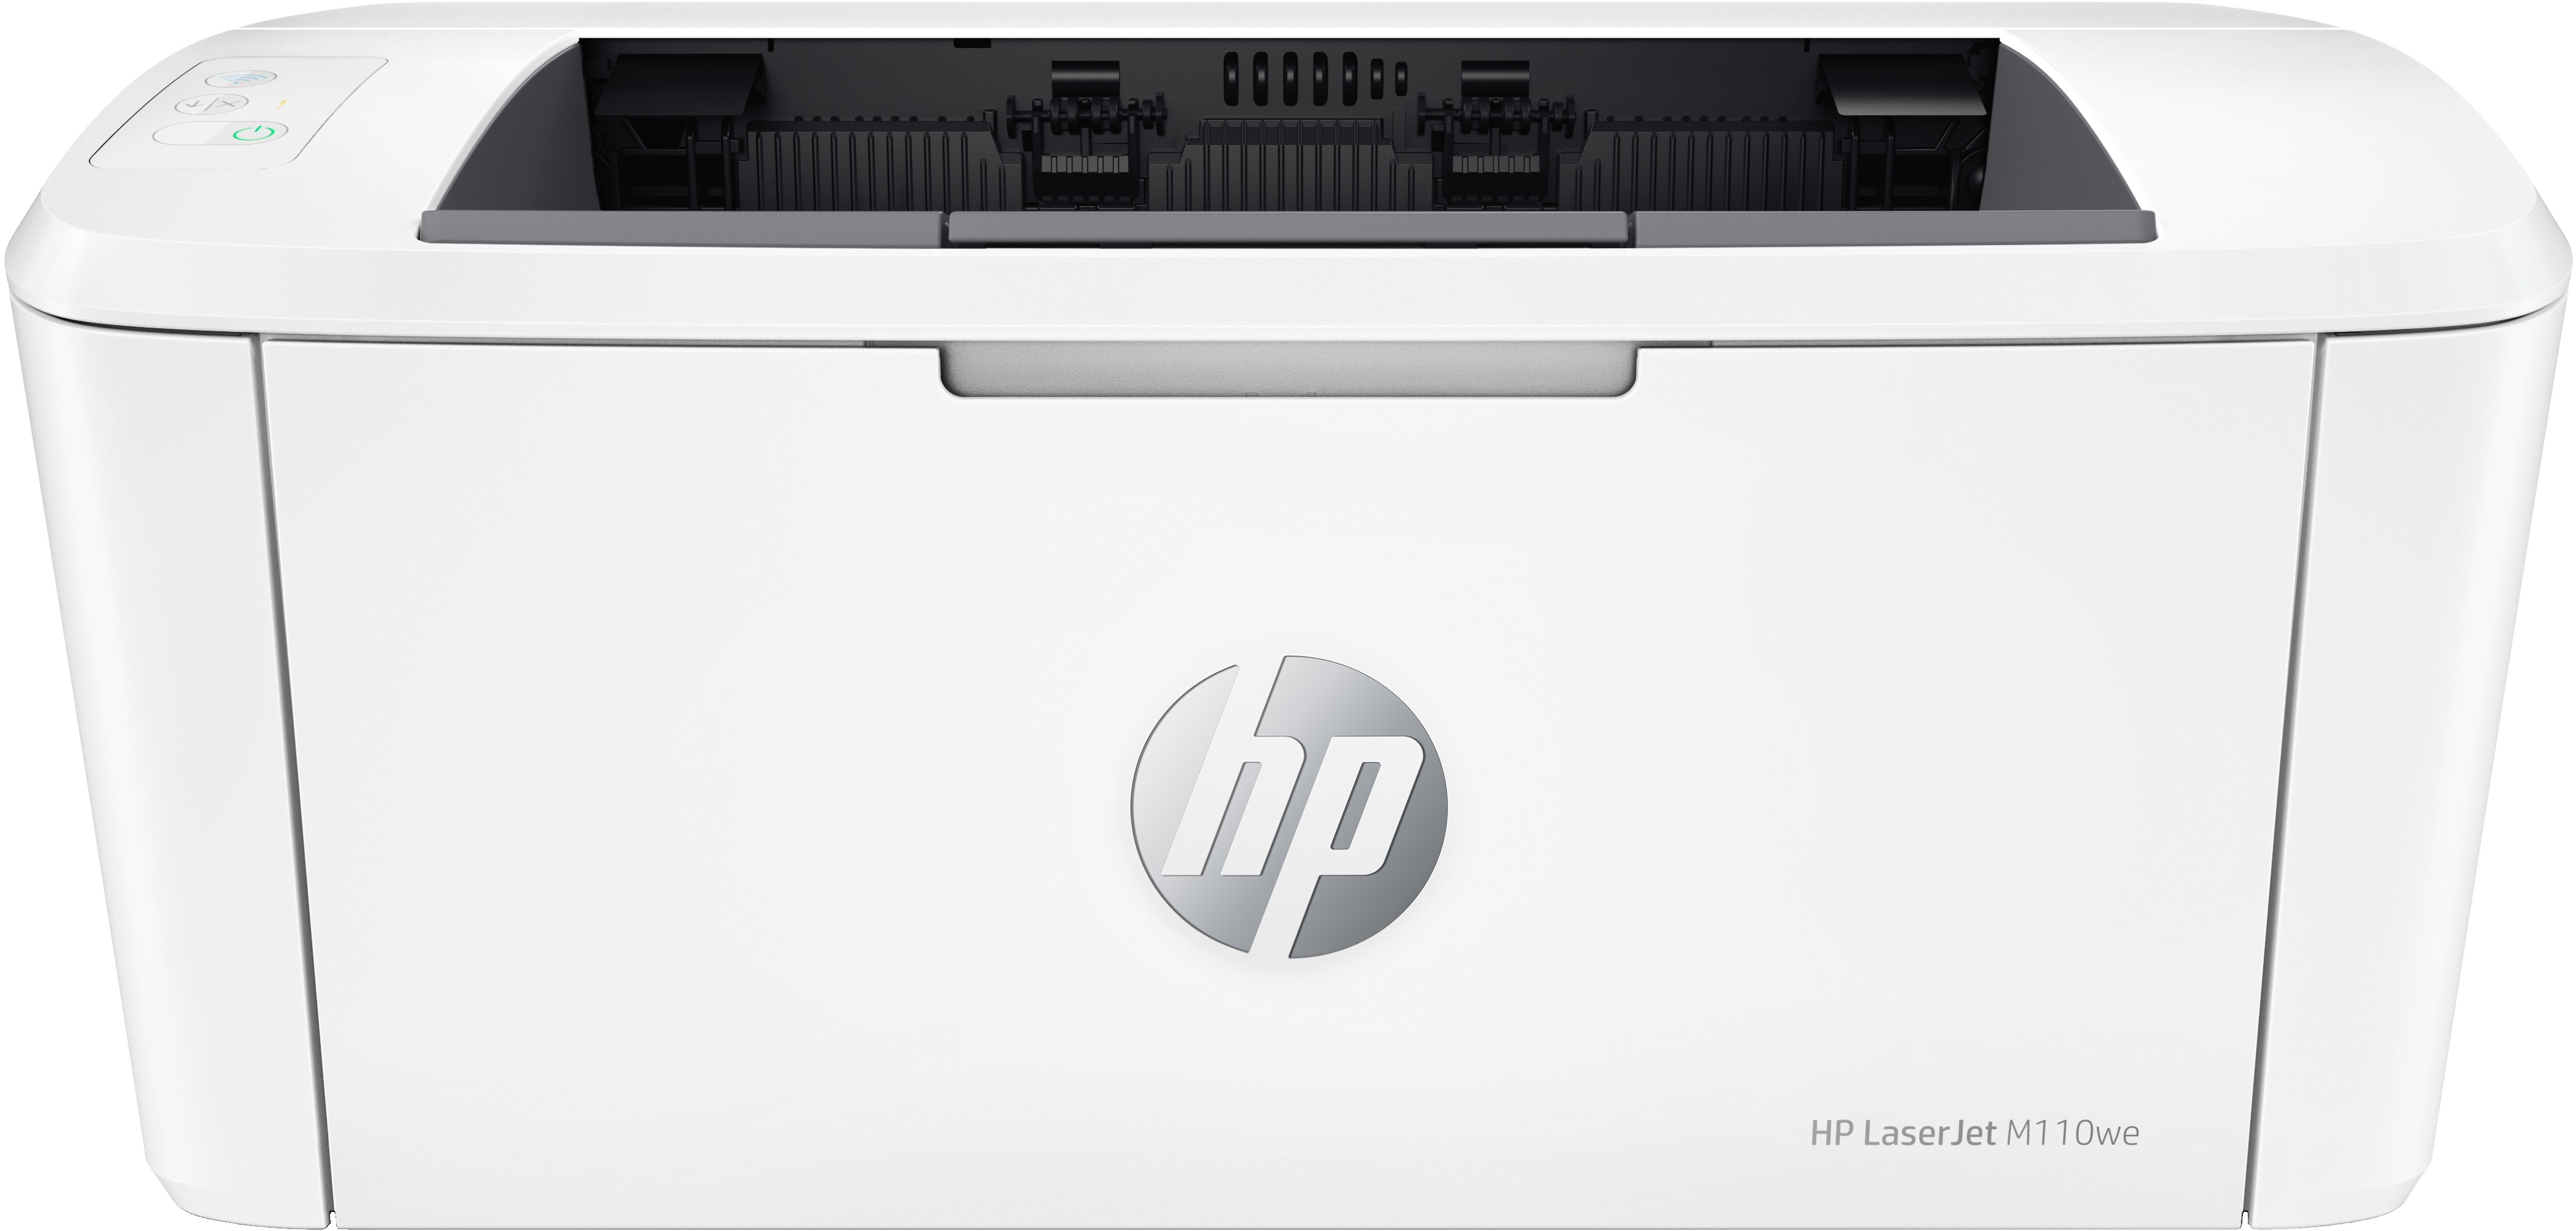 HP Stampante HP LaserJet M110we, Bianco e nero, Stampante per